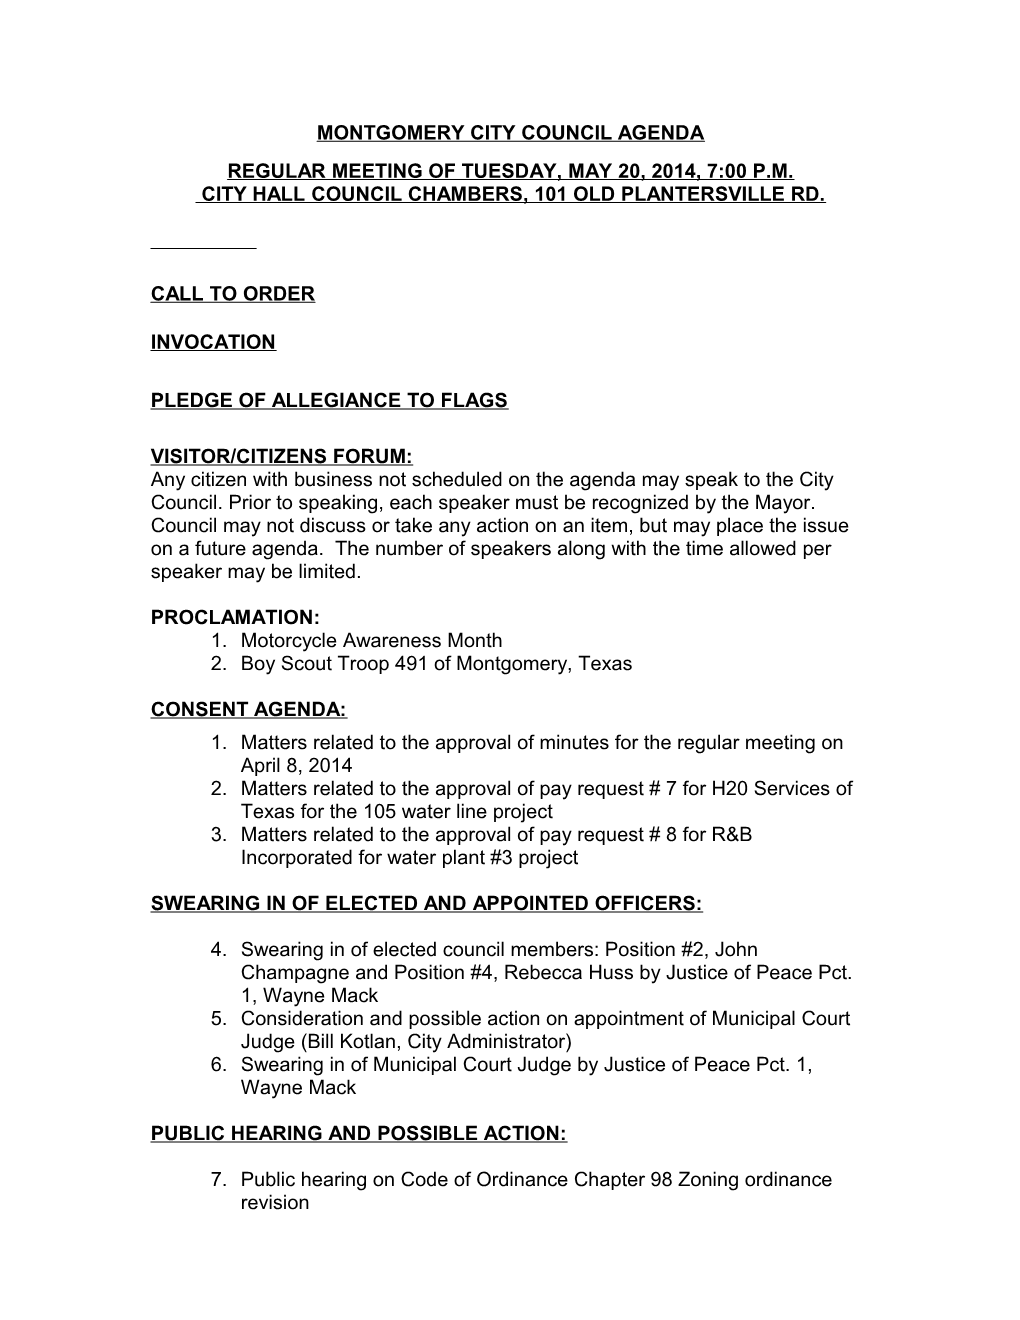 Montgomery City Council Agenda